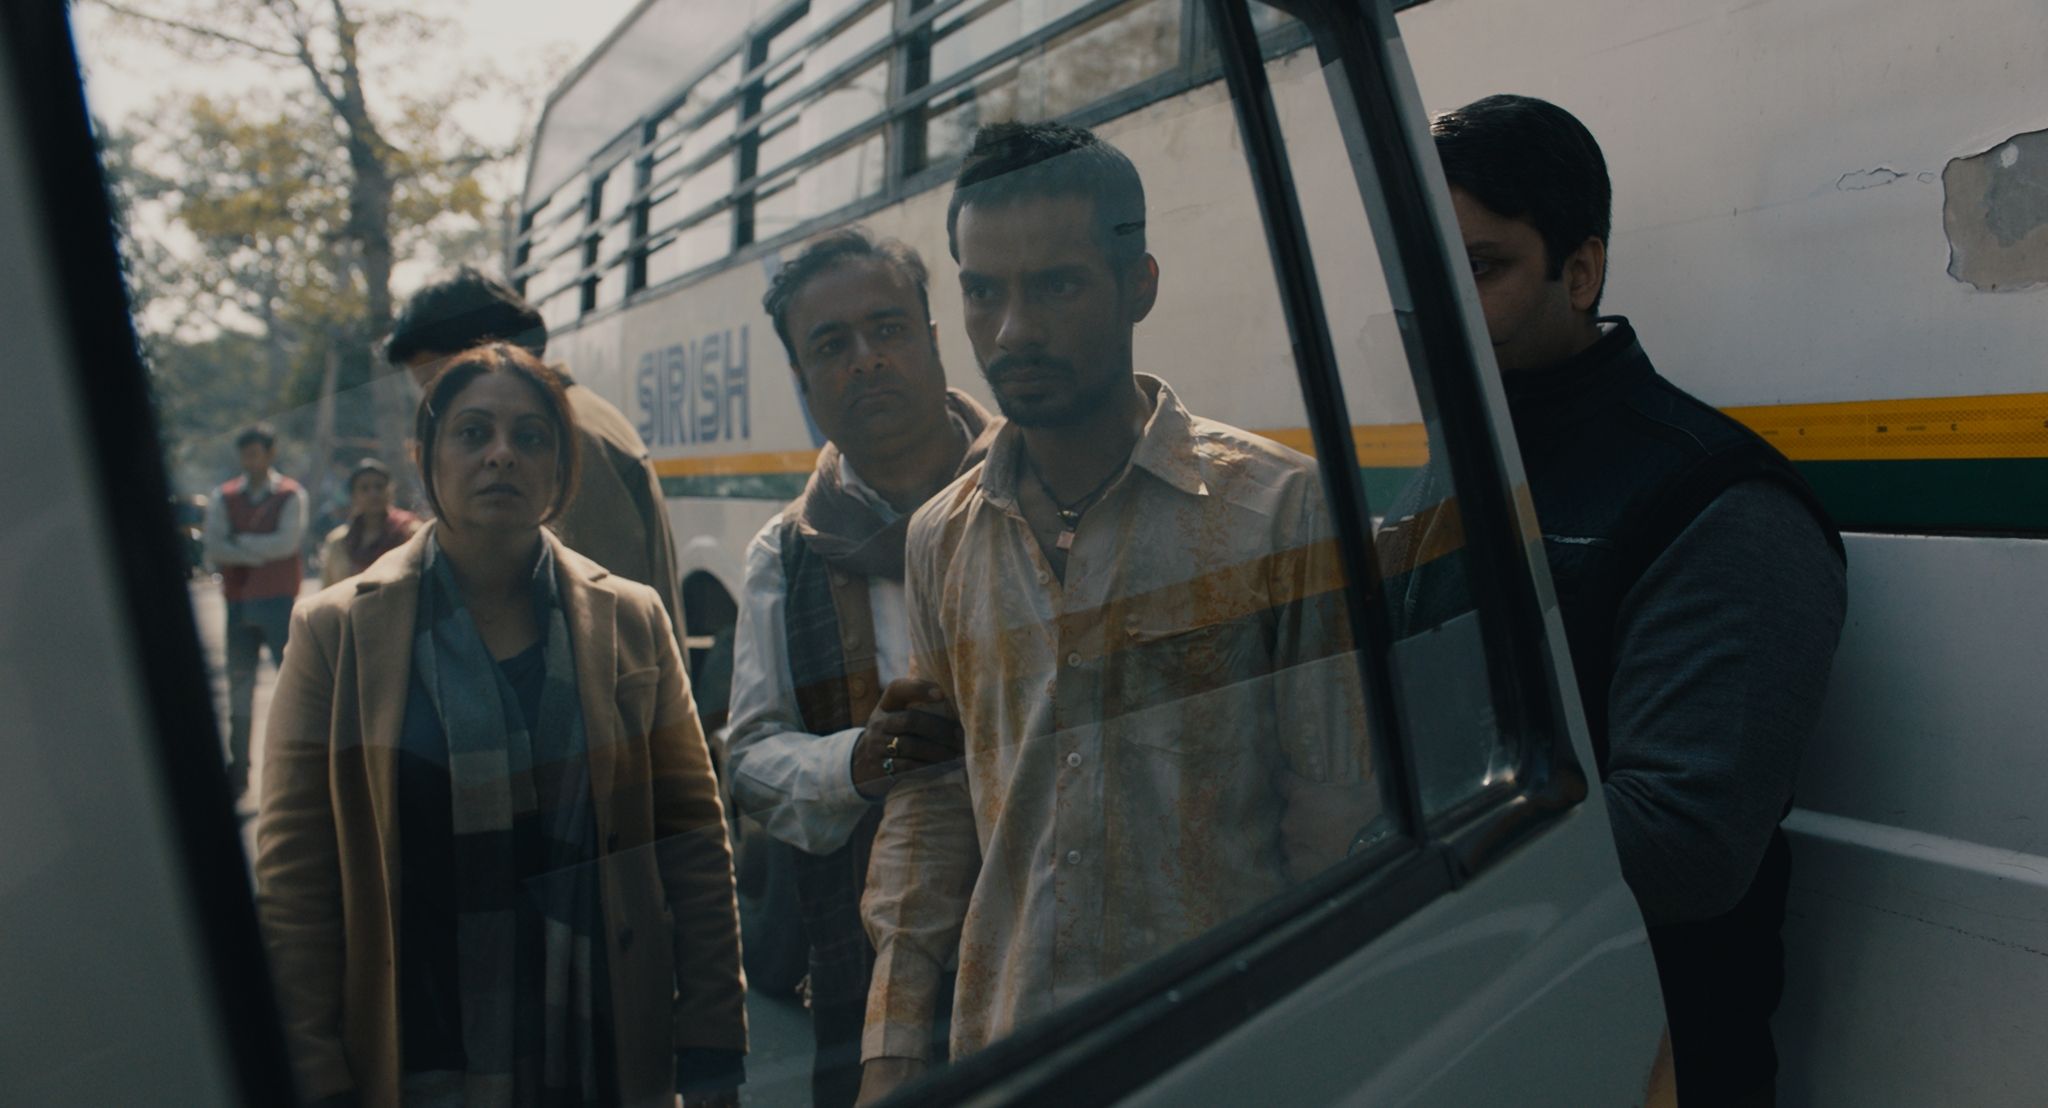 New Public Bus Rep Sex Video - The True Story Behind Netflix's 'Delhi Crime' Is Absolutely Horrific